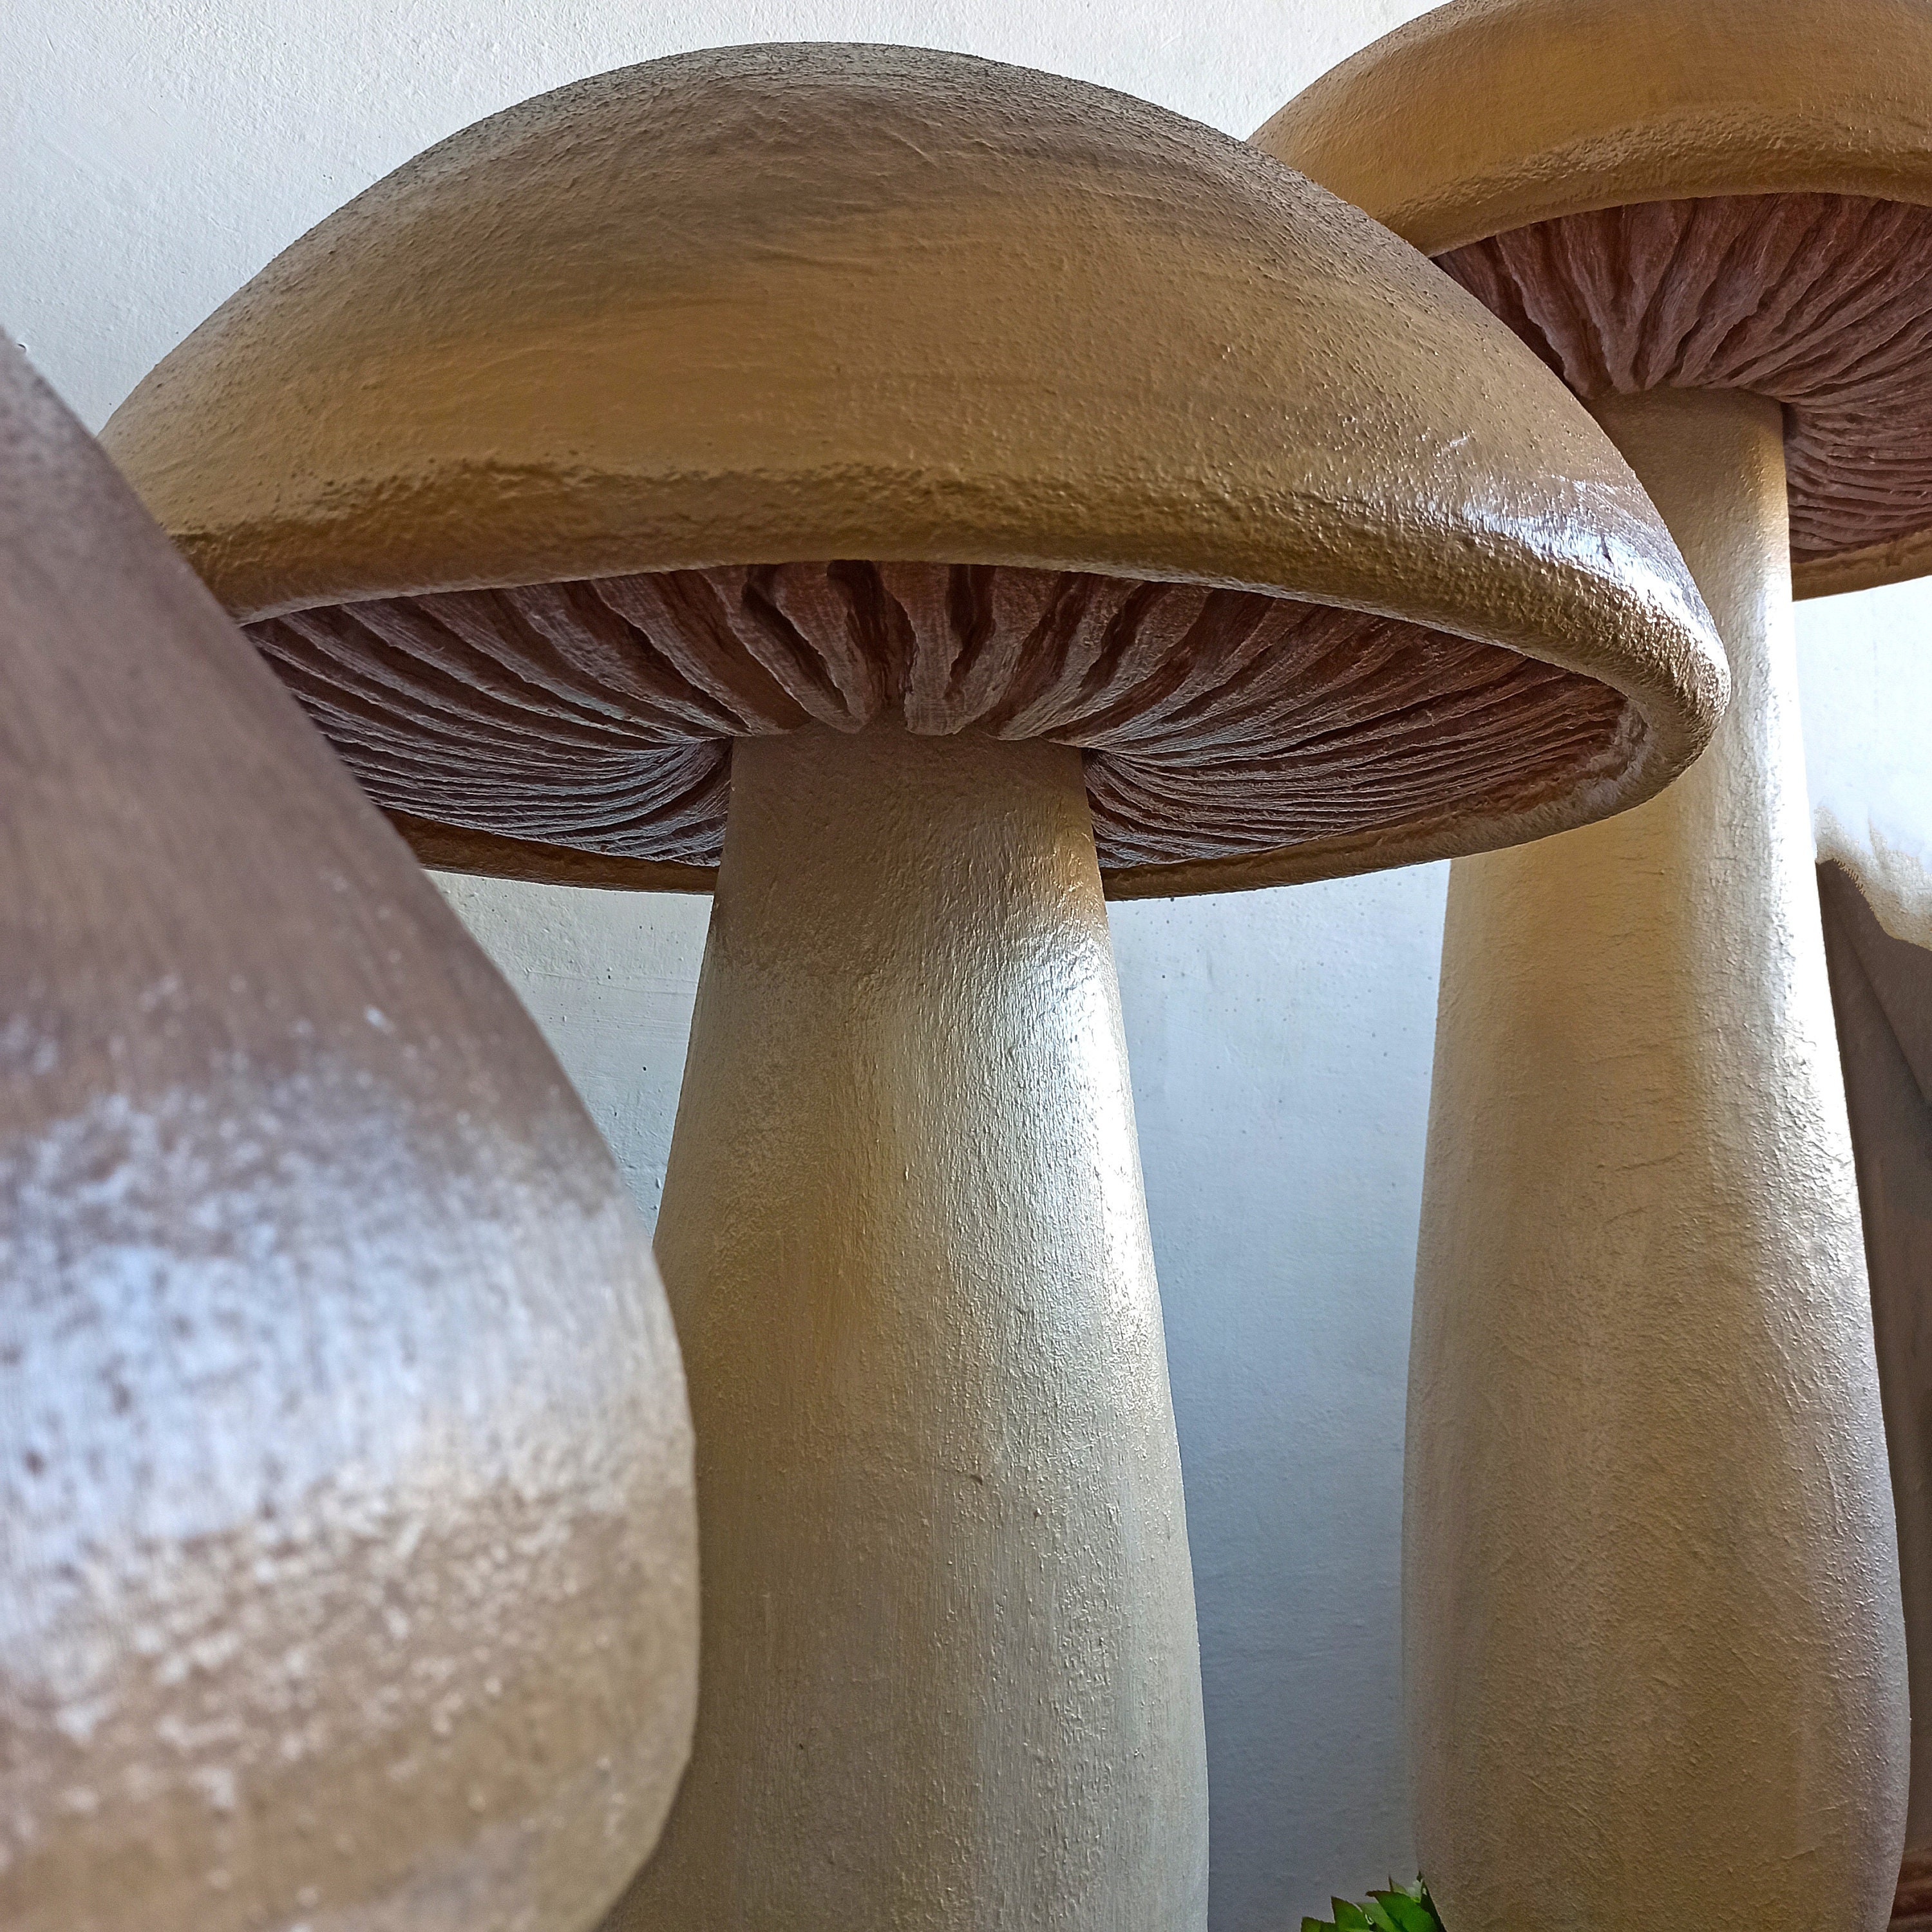 Polystone decorative fake mushrooms decor – Window Display Props